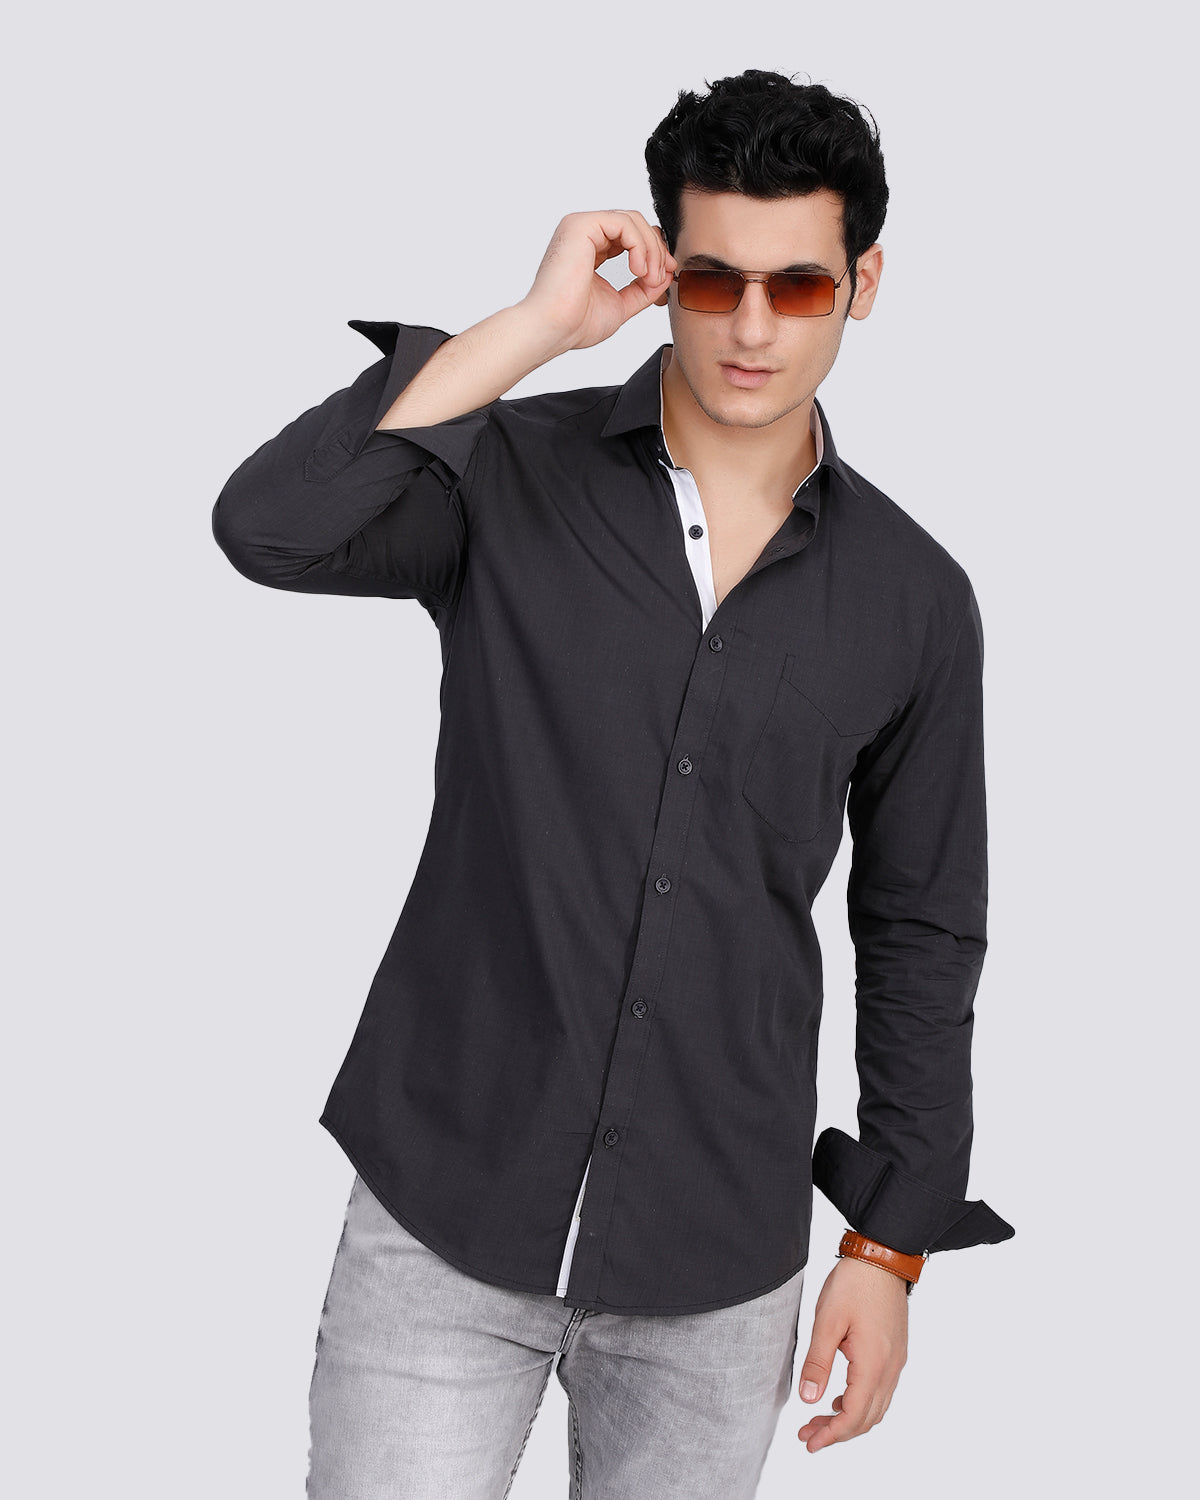 Cotton Charcoal Black Semi Formal Shirt